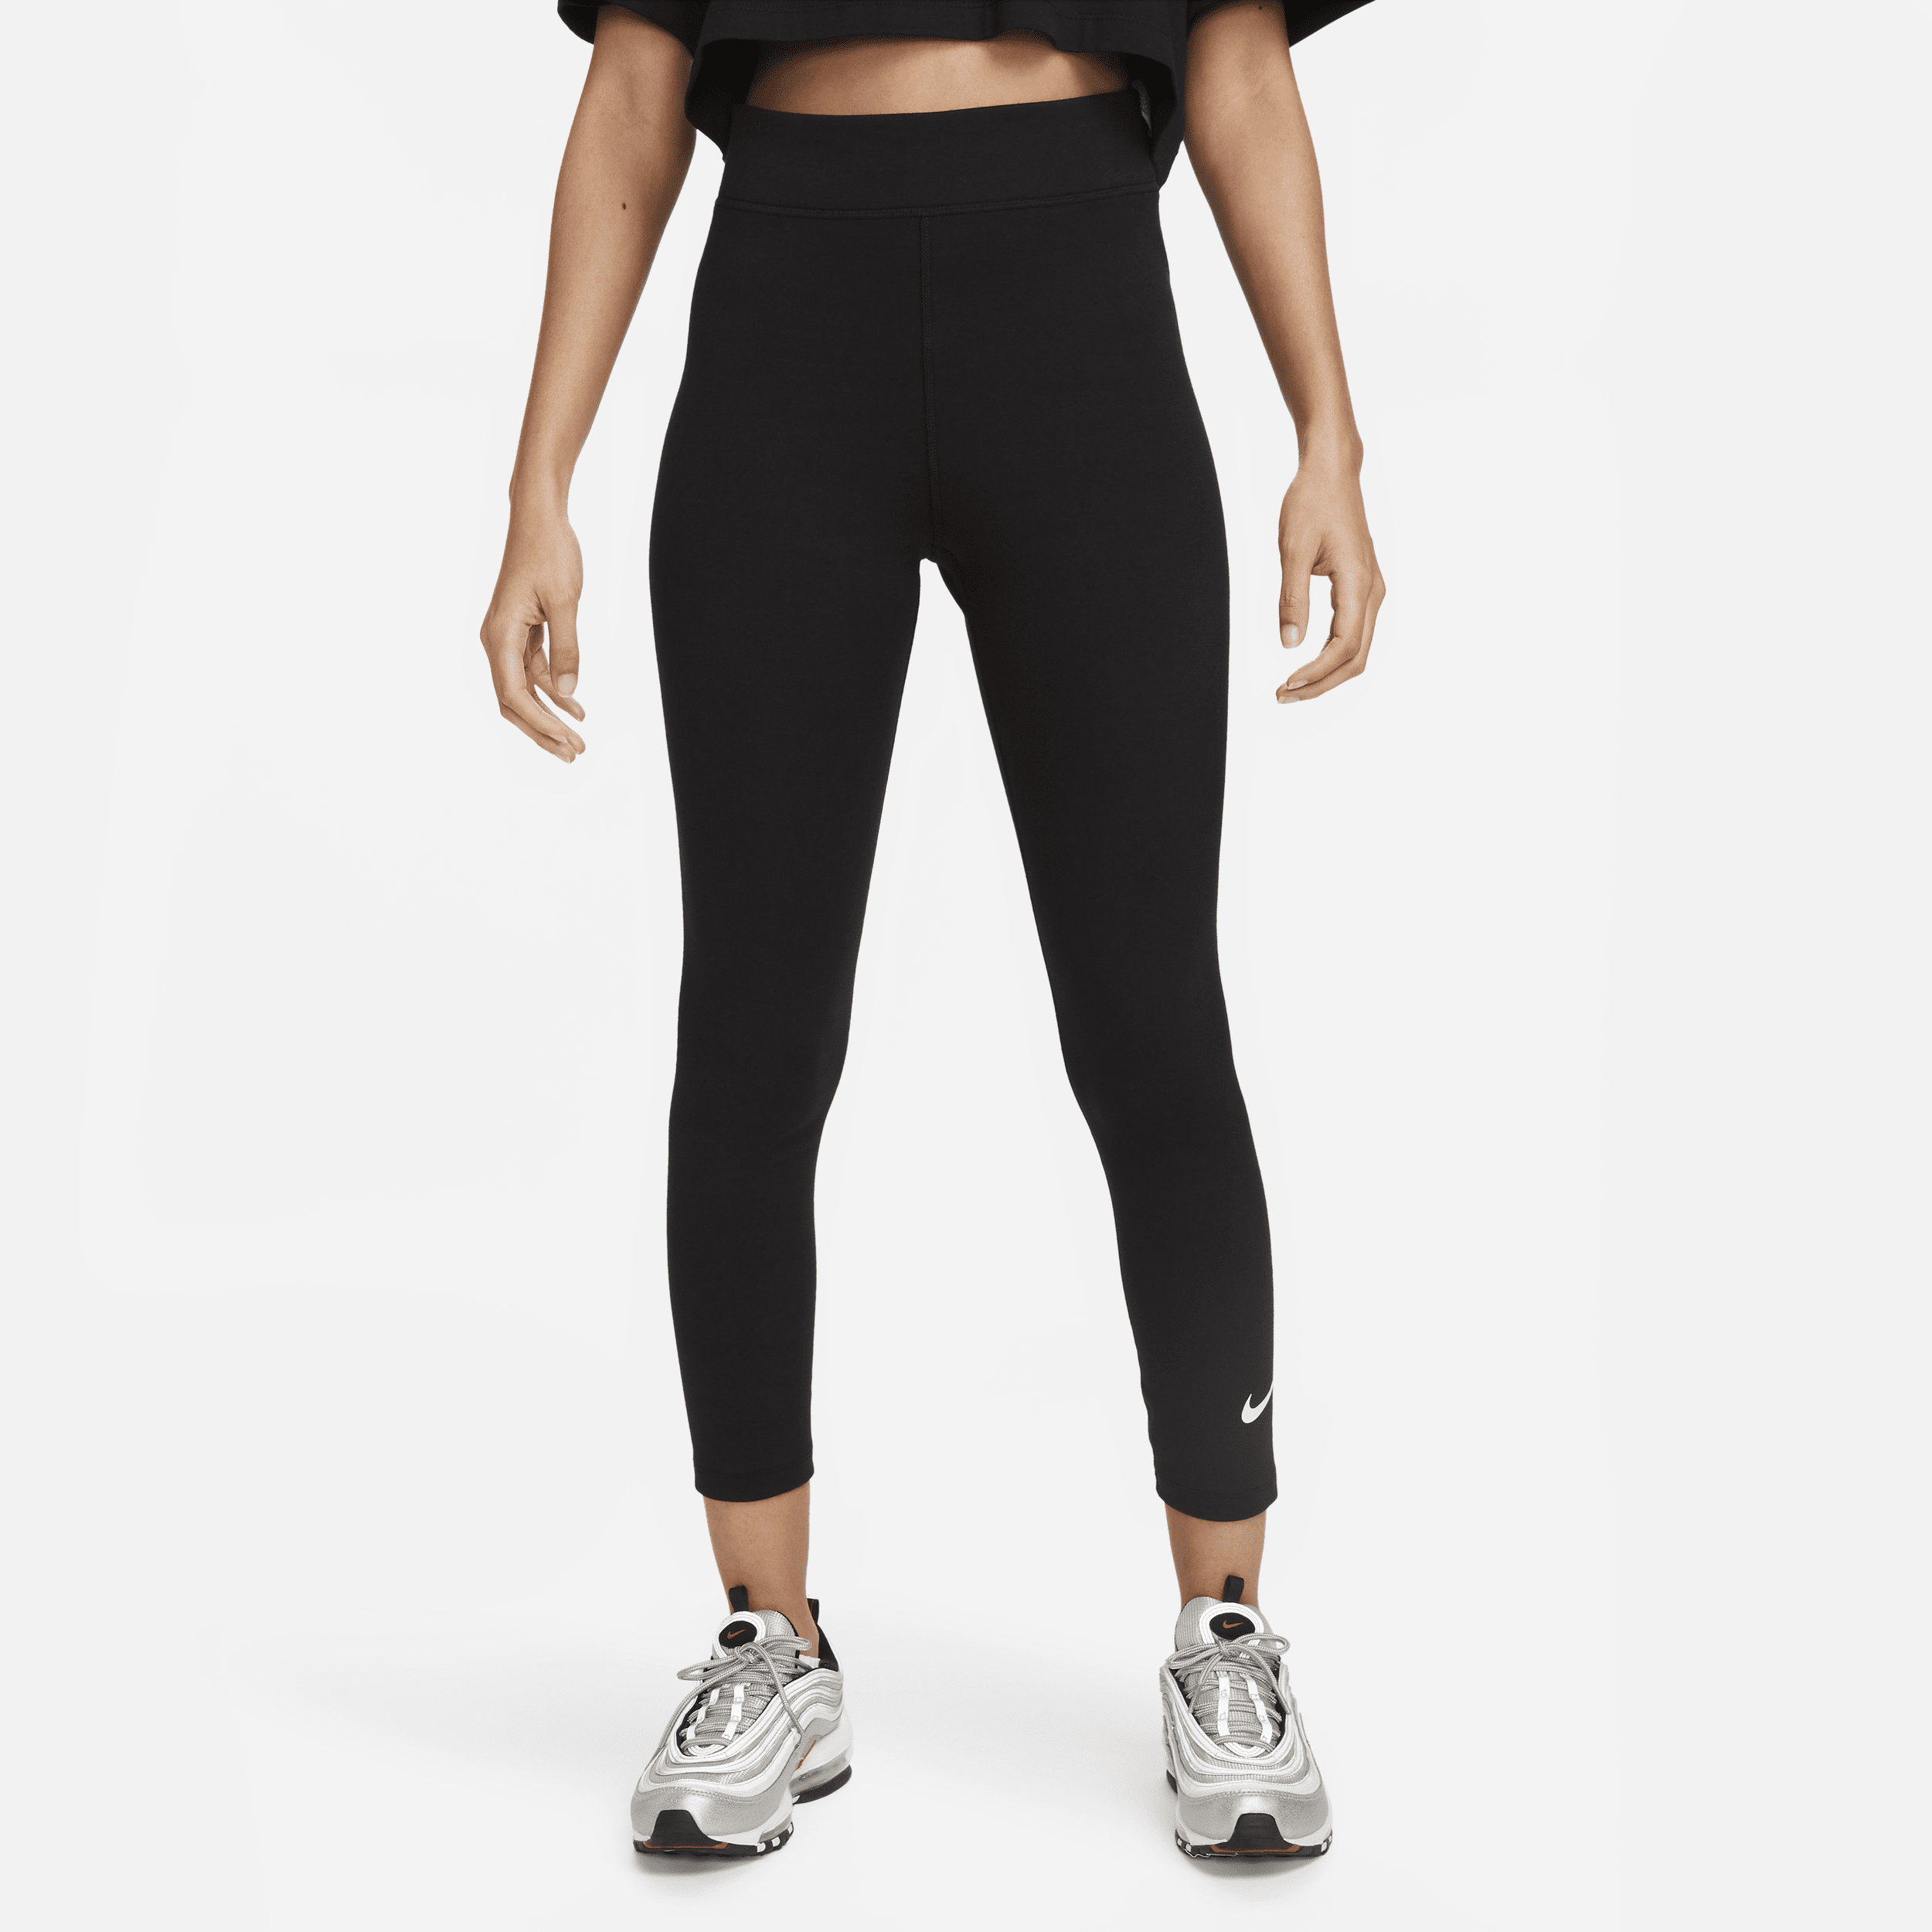 Højtaljede 7/8-Nike Sportswear Classic-leggings til kvinder - sort